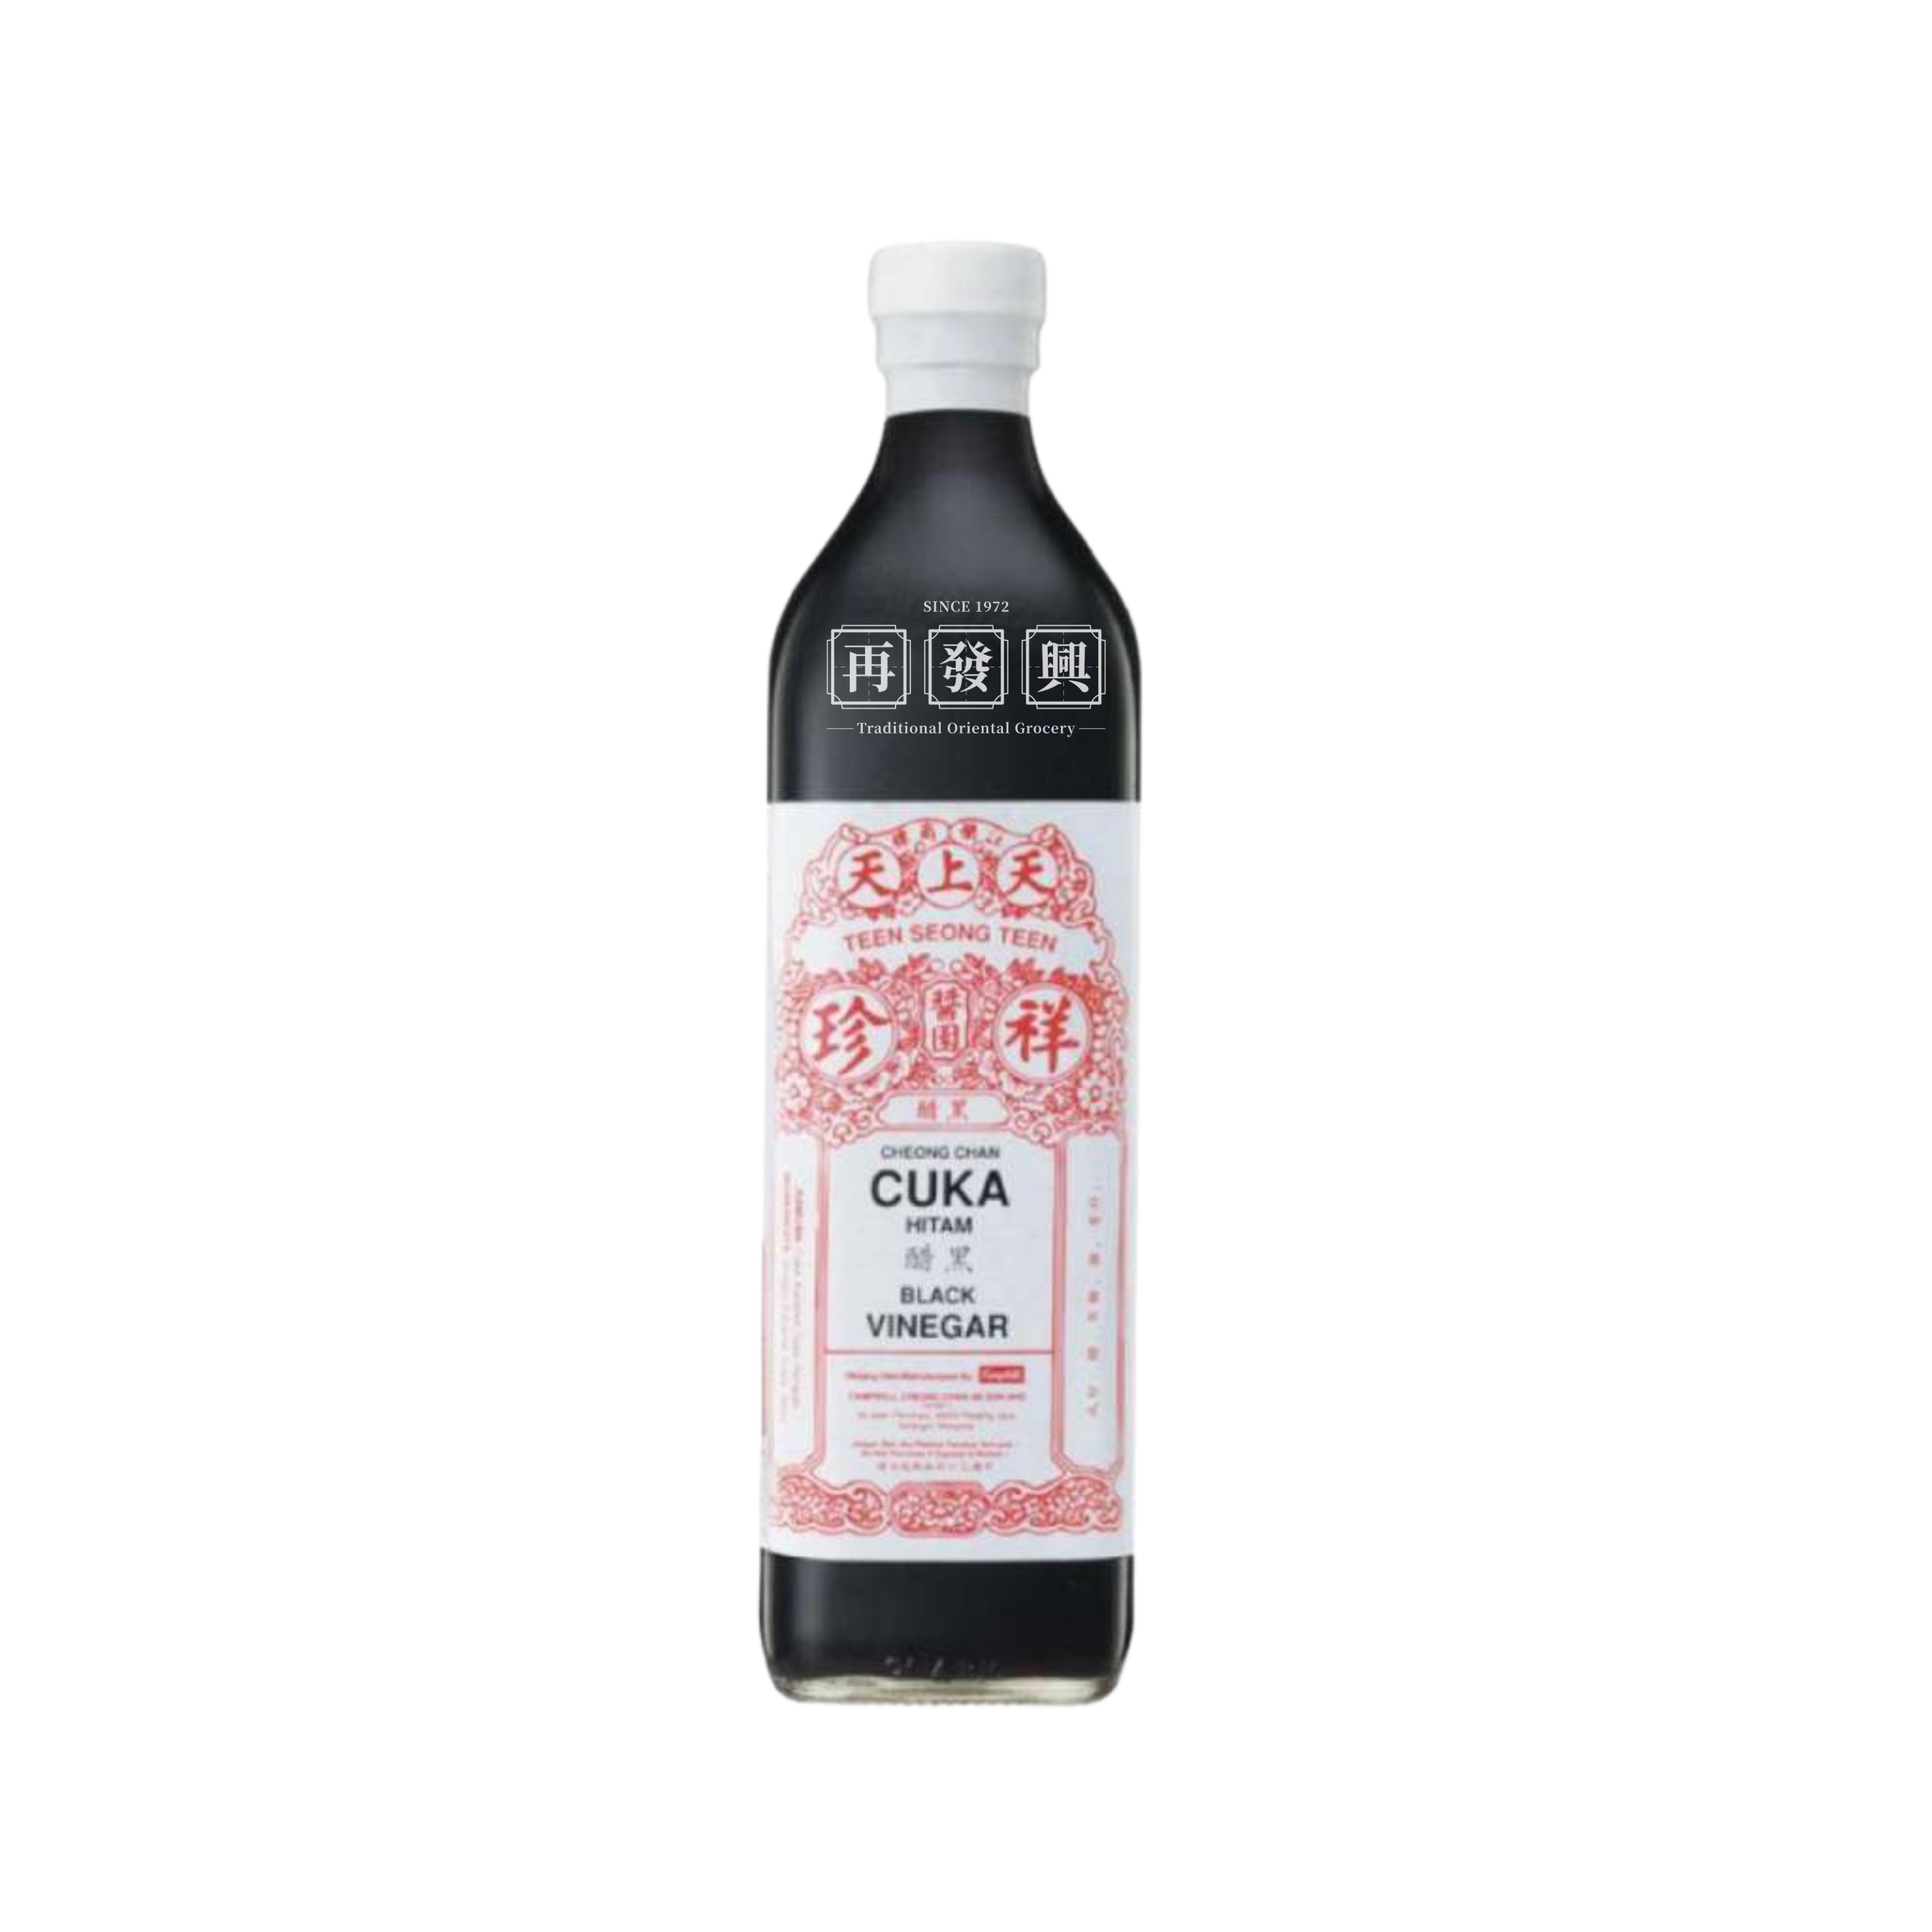 TST Black Vinegar Cuka Hitam 750ml